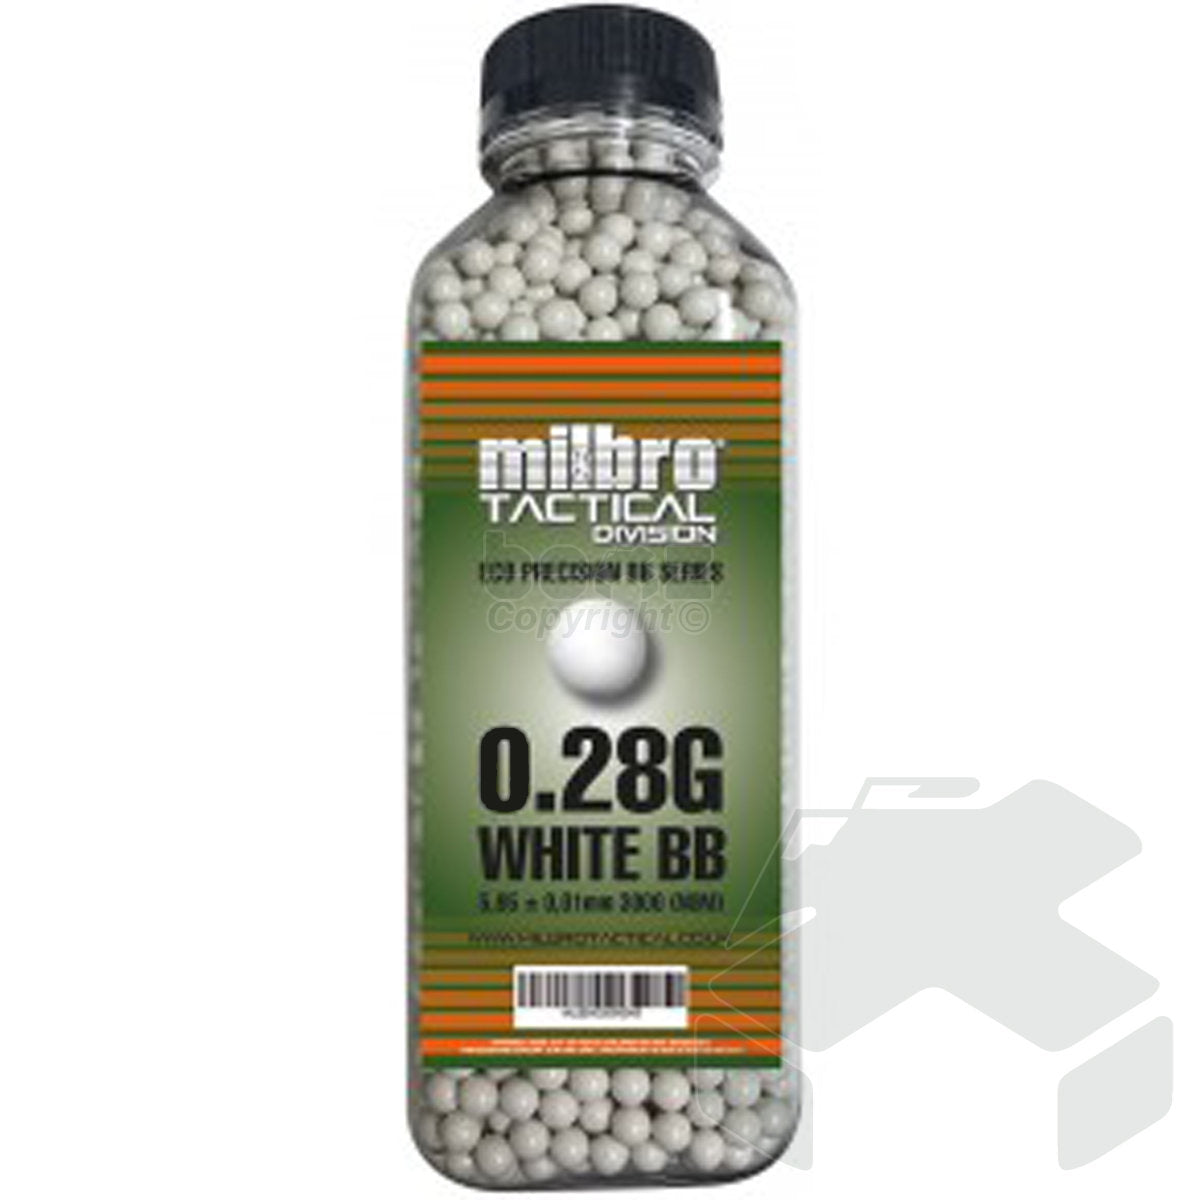 Milbro Tactical Division 0.28G 6mm Bio BB 3000 Pcs Bottle - White